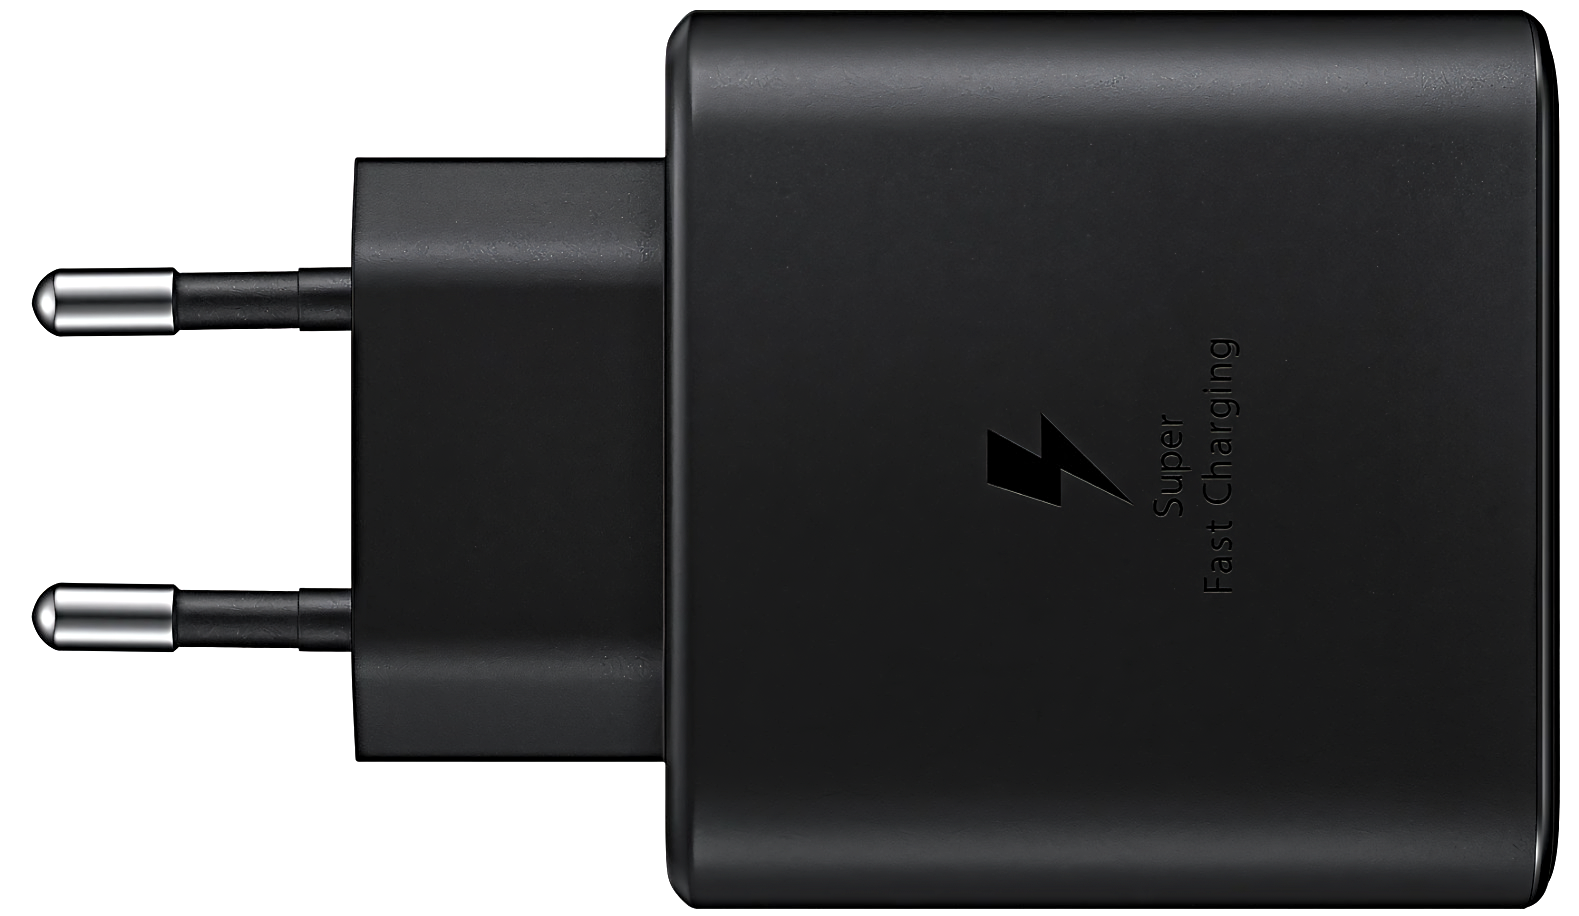 Адаптер питания для Samsung 45W PD Adapter USB-C / Супер быстрая зарядка Super Fast Charging 45Вт / Black